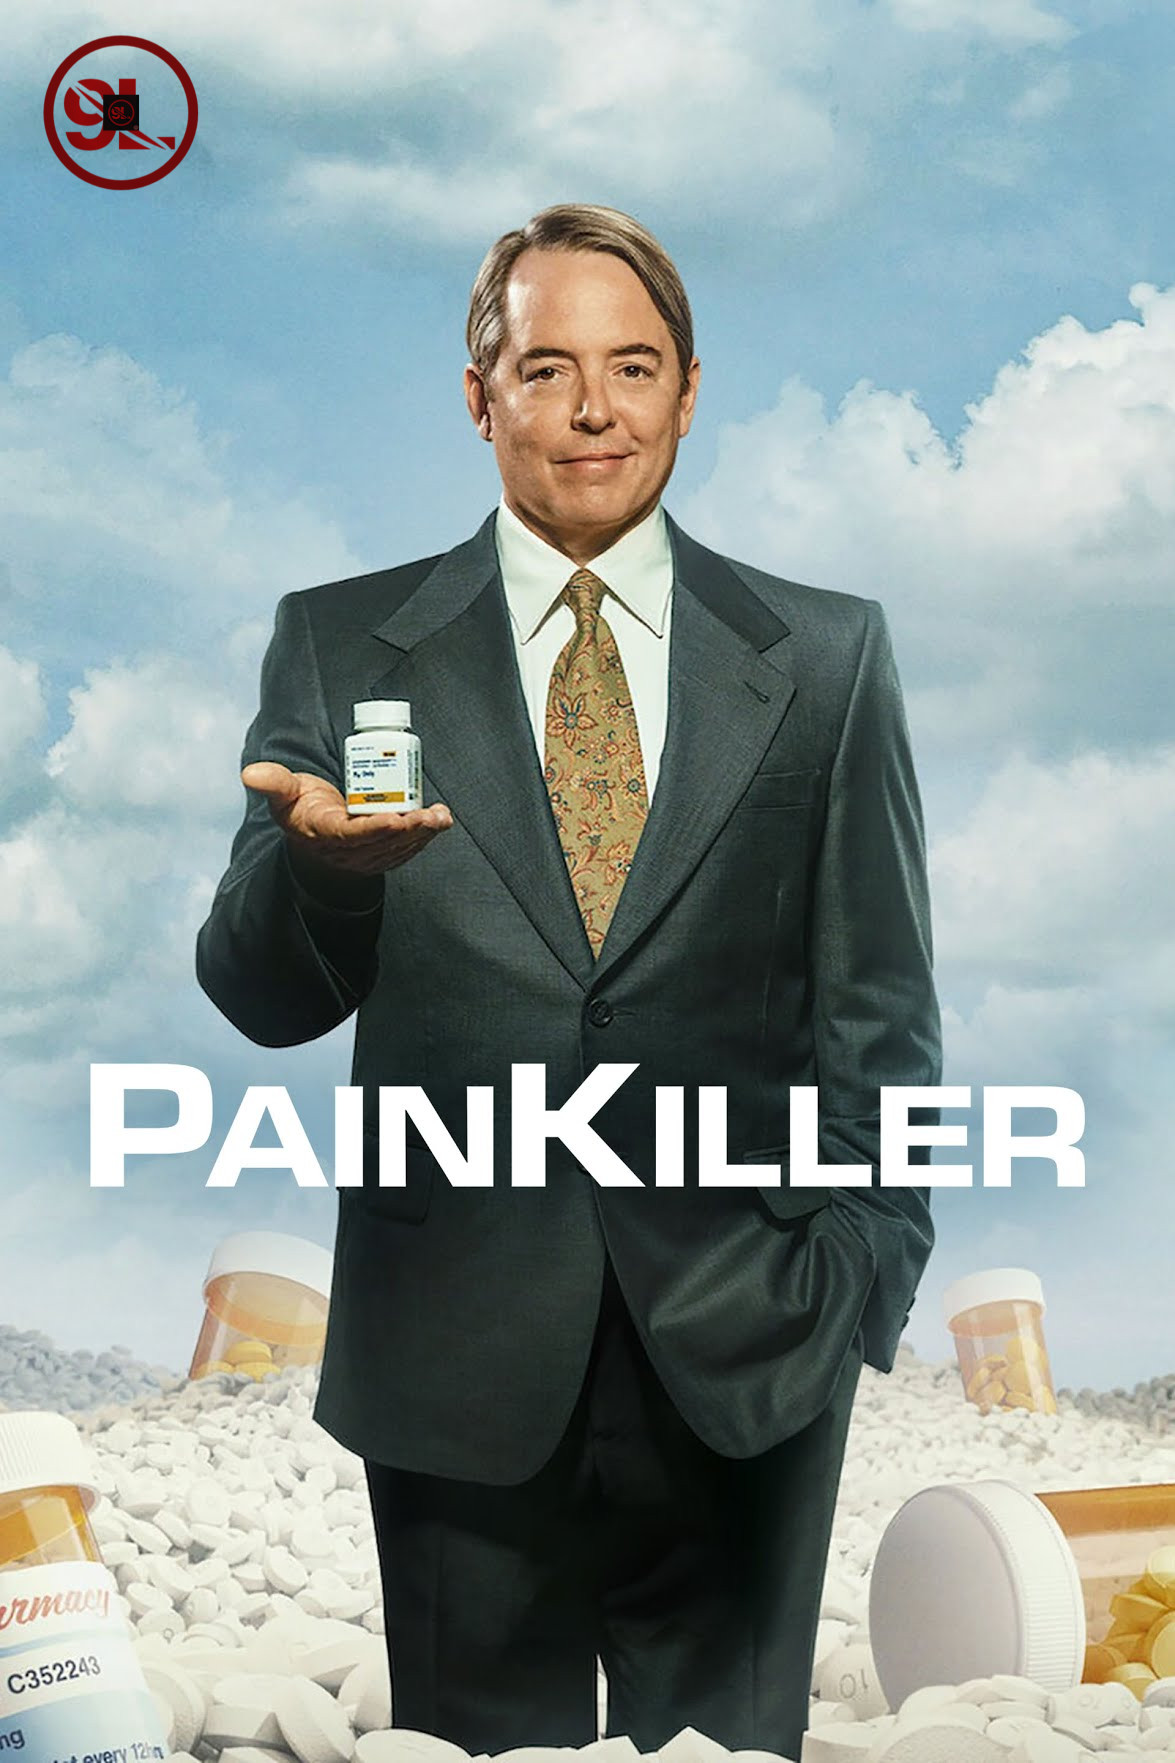 DOWNLOAD: Painkiller (TV series)